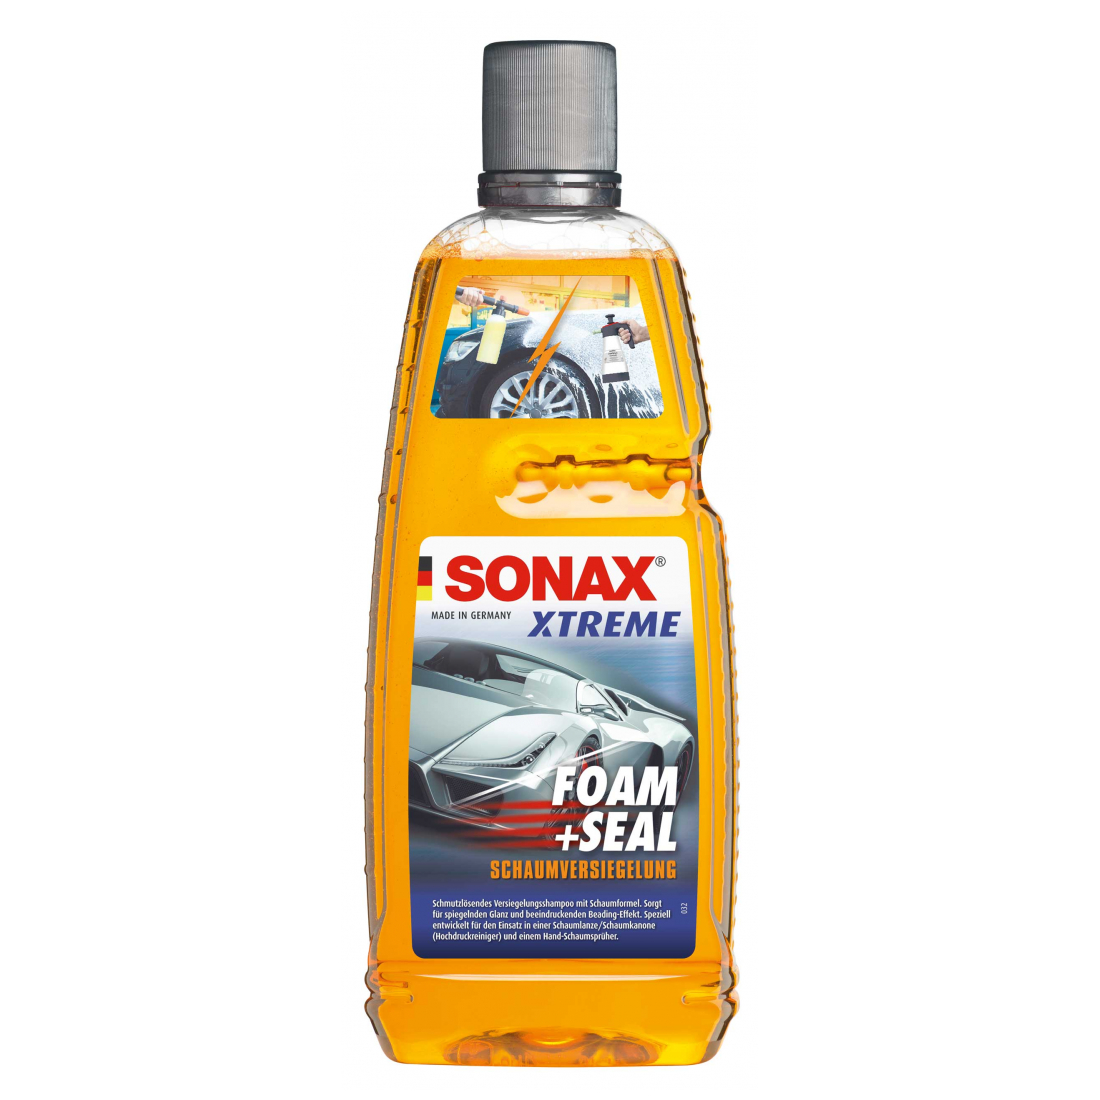 SONAX XTREME Foam+Seal Versiegelungsshampoo Wash Wax 1L 02513000